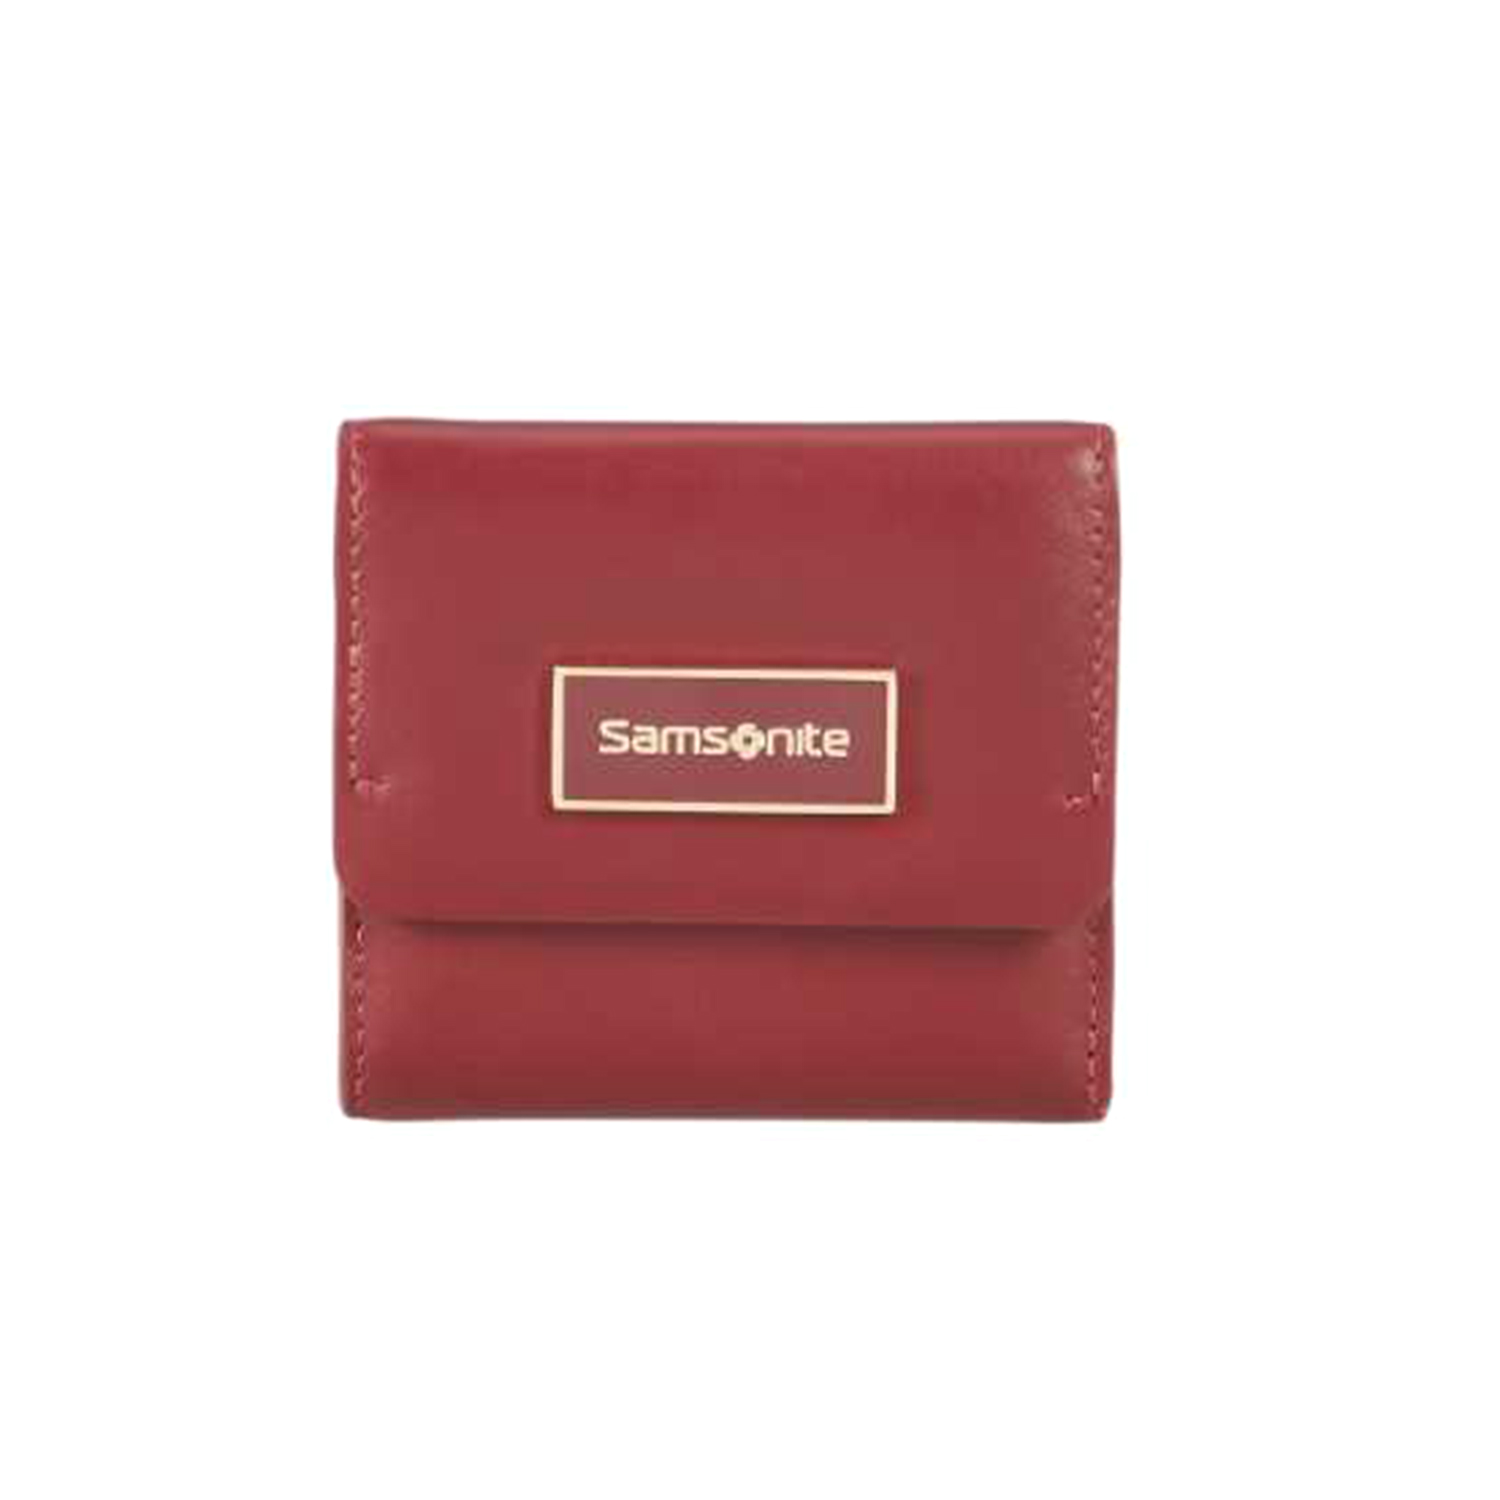 SAMSONITE – Unisex πορτοφόλι SAMSONITE KARISSA LTH SLG 335 – L W 2CC+ καφέ